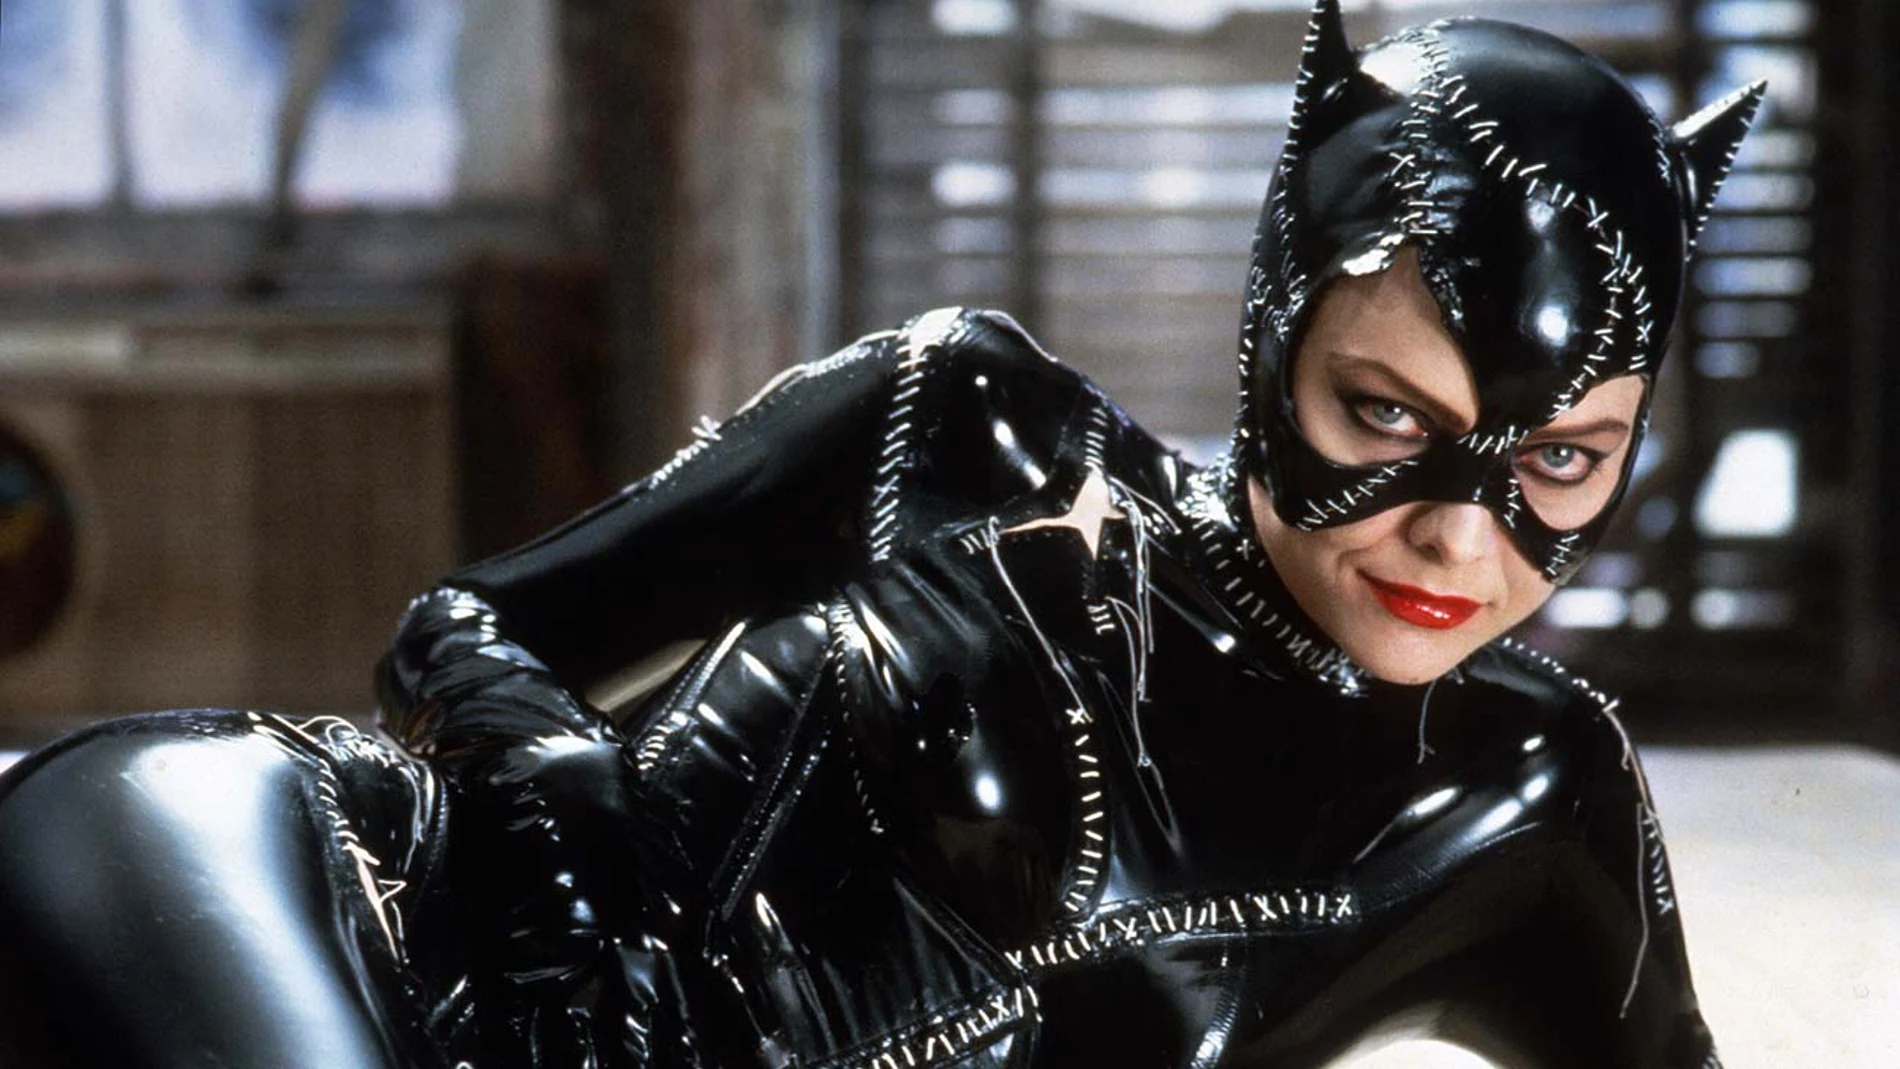 Batman Returns (1992)Directed by Tim BurtonShown: Michelle Pfeiffer (as Catwoman)